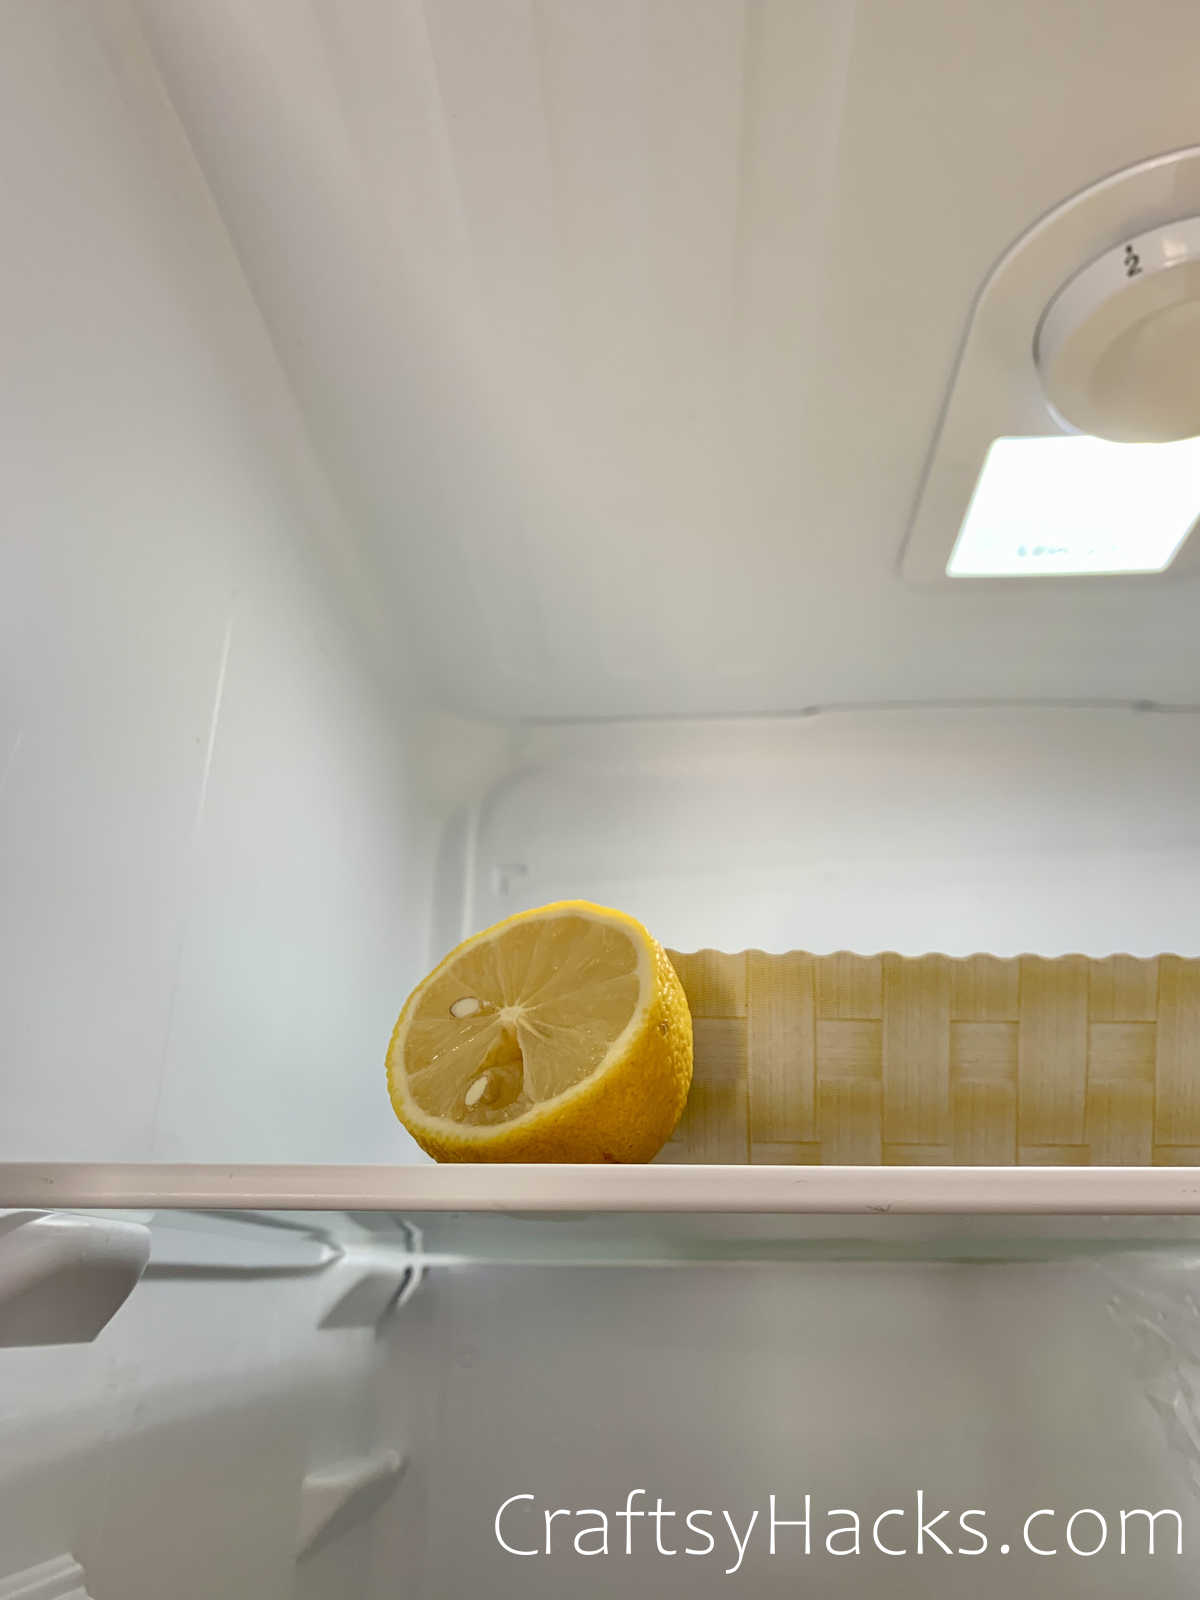 put a lemon in the fridge for a fresh smell